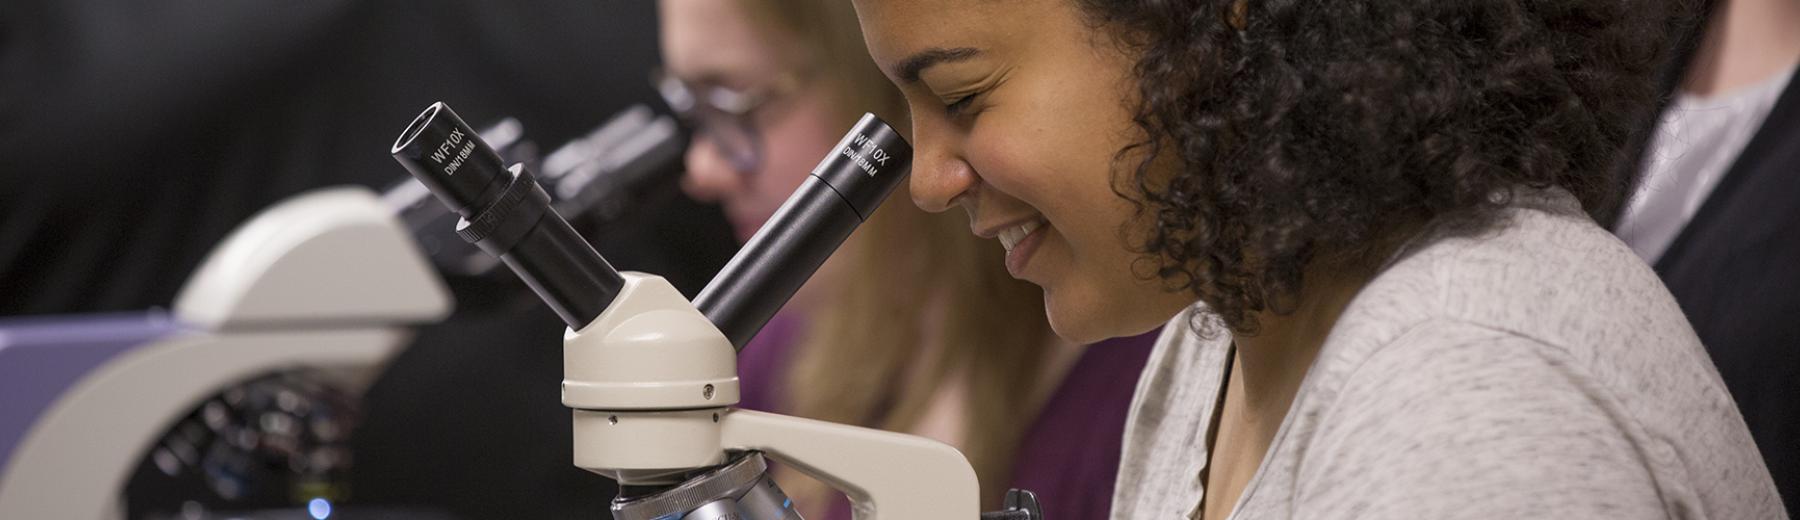 Students use microscopes